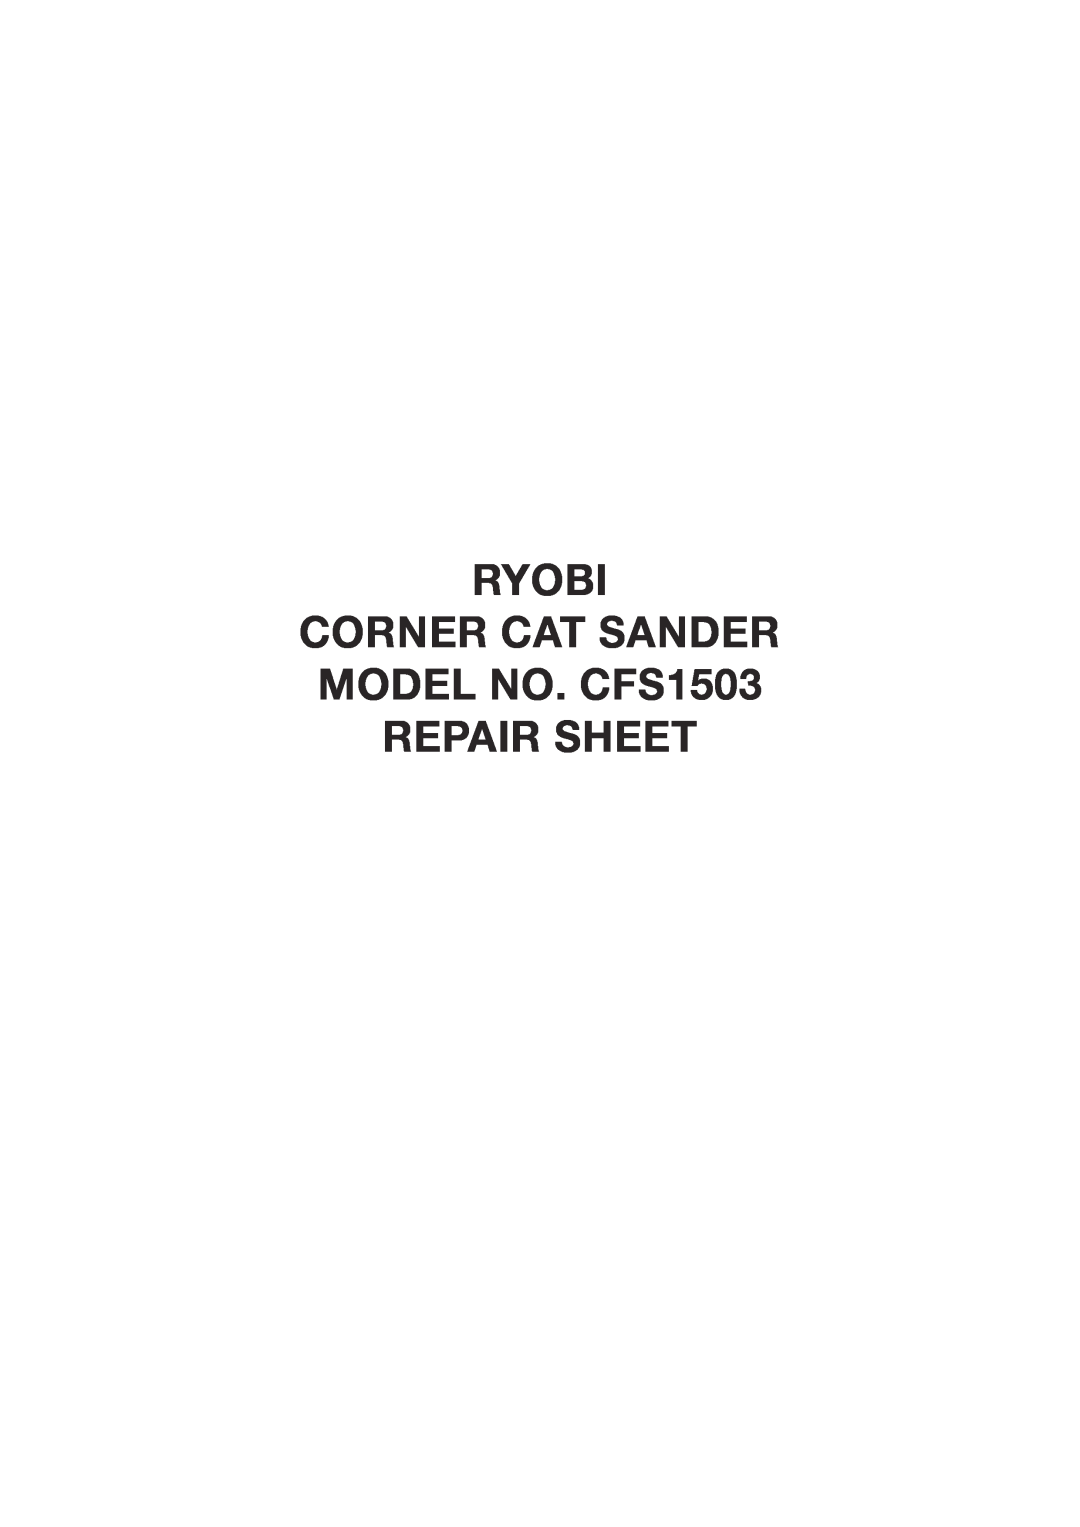 Ryobi CFS1501-36, CFS1501-38, CFS1501-34, CFS1501-37, 987000149 manual RYOBI CORNER CAT SANDER MODEL NO. CFS1503 REPAIR SHEET 